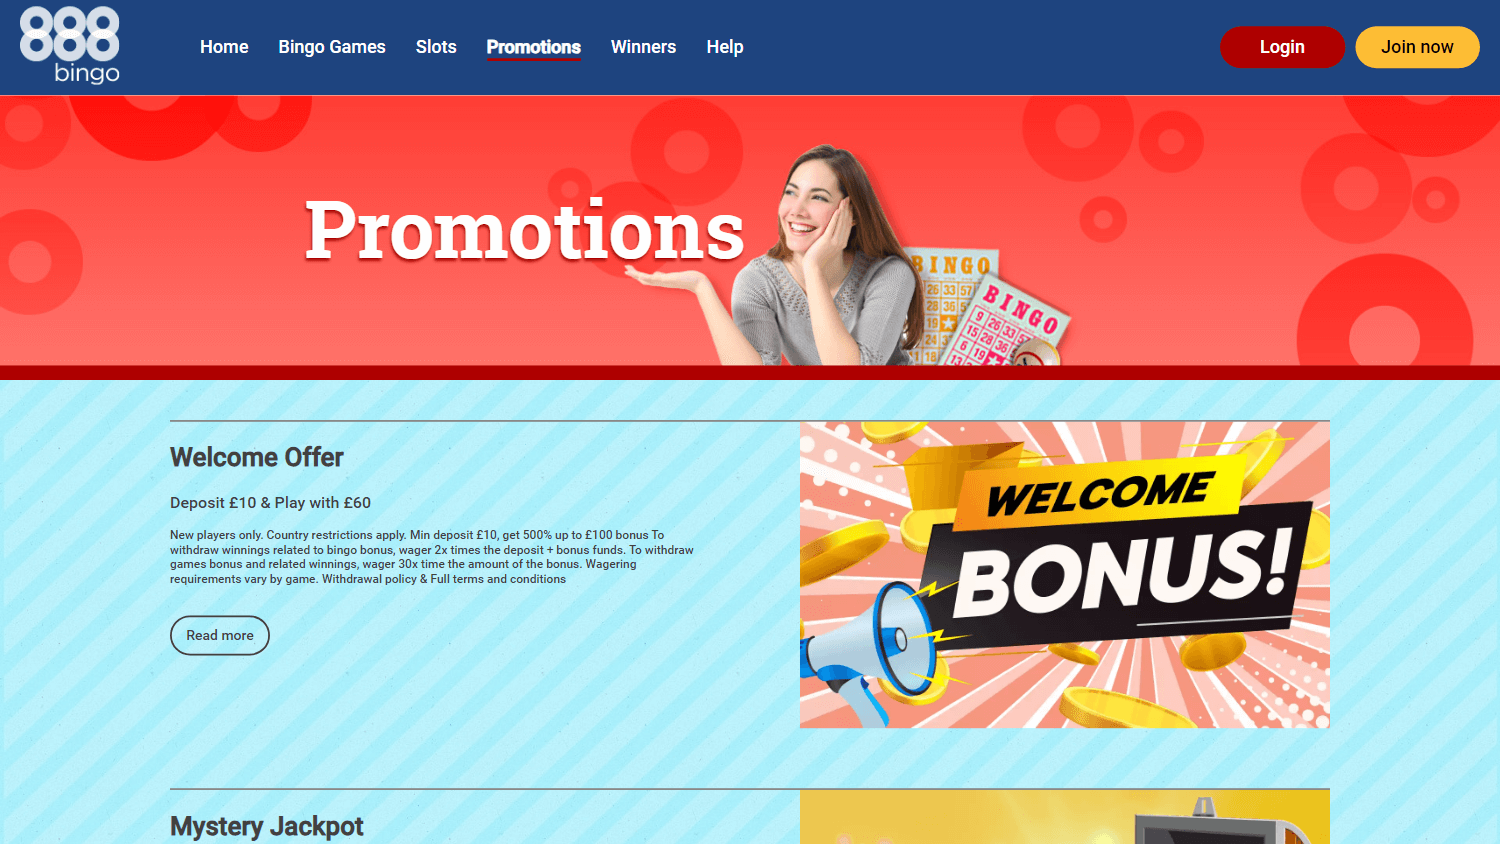 888_bingo_casino_promotions_desktop